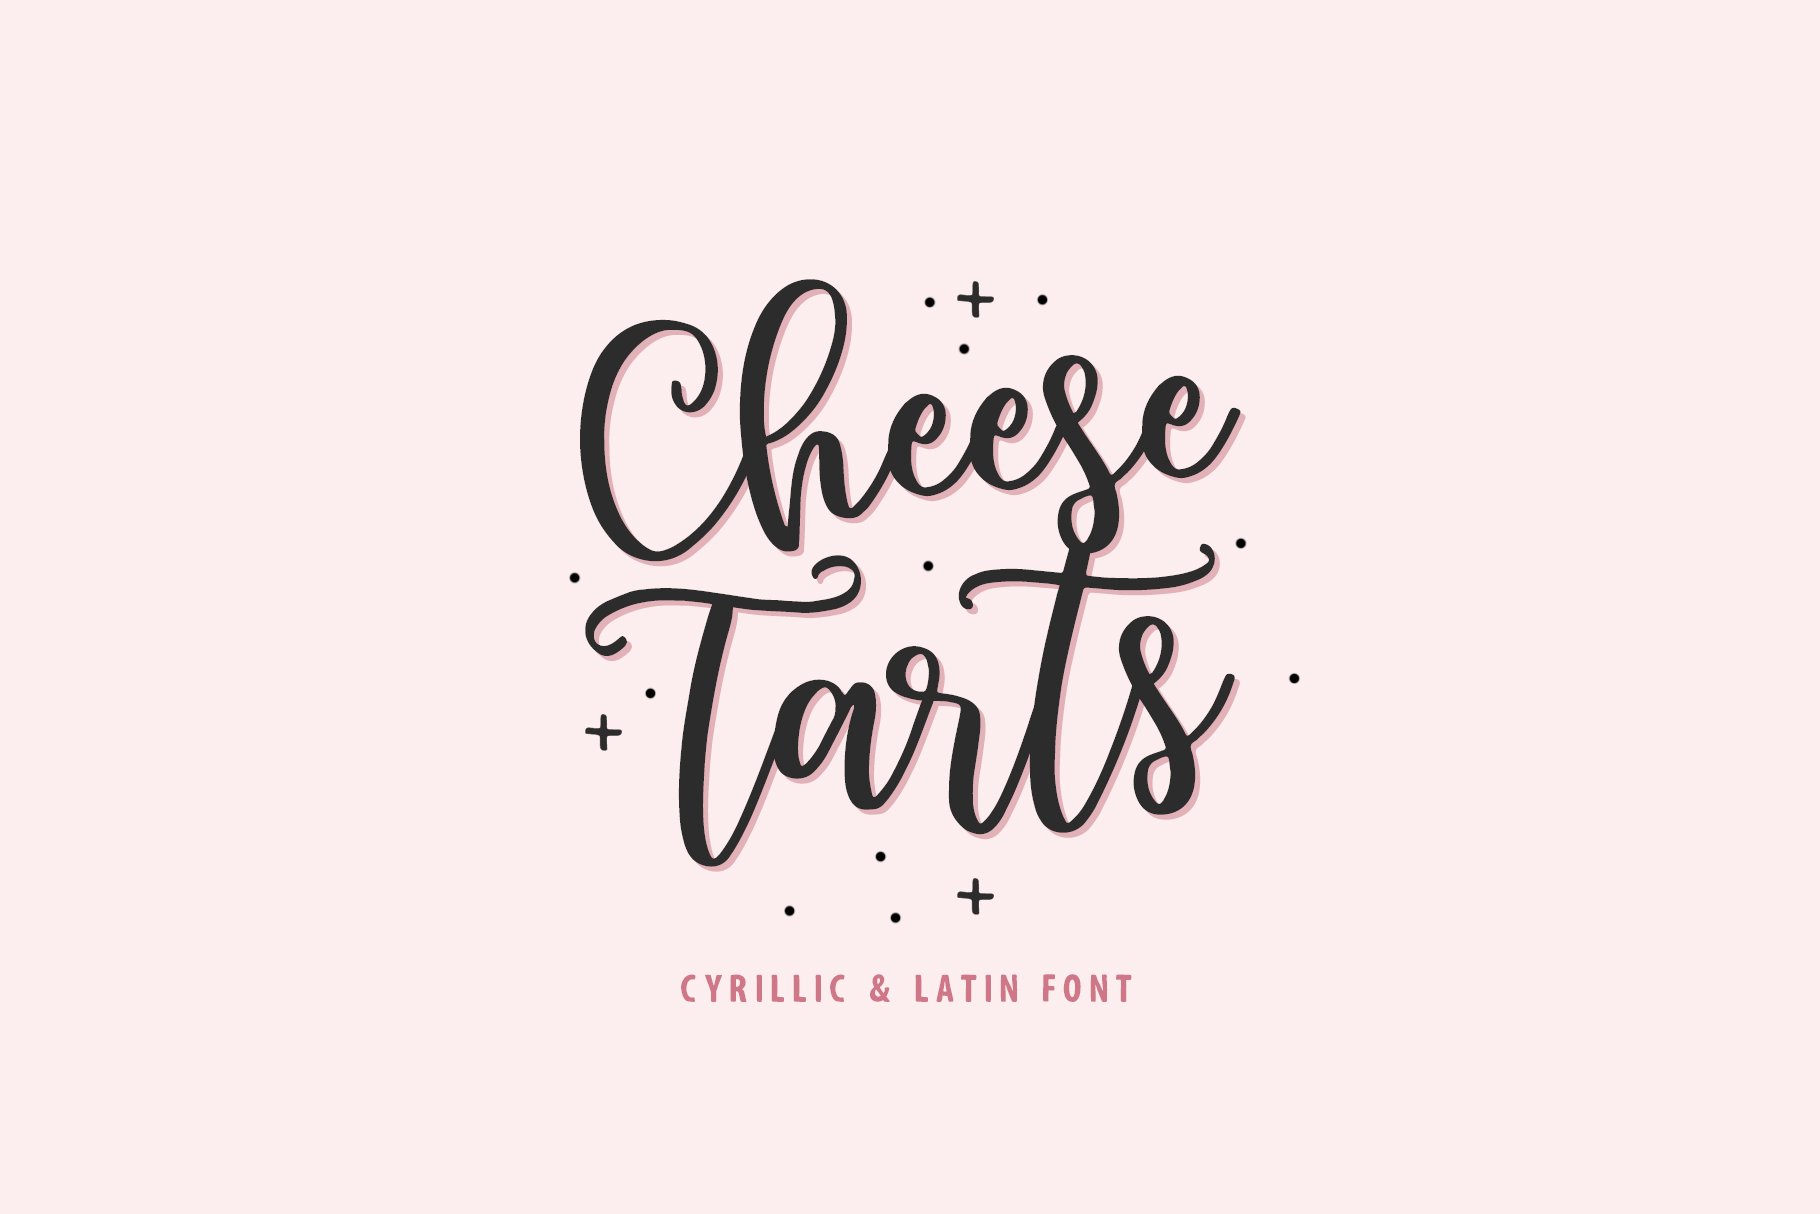 Cheese Tarts cyrillic font cover image.